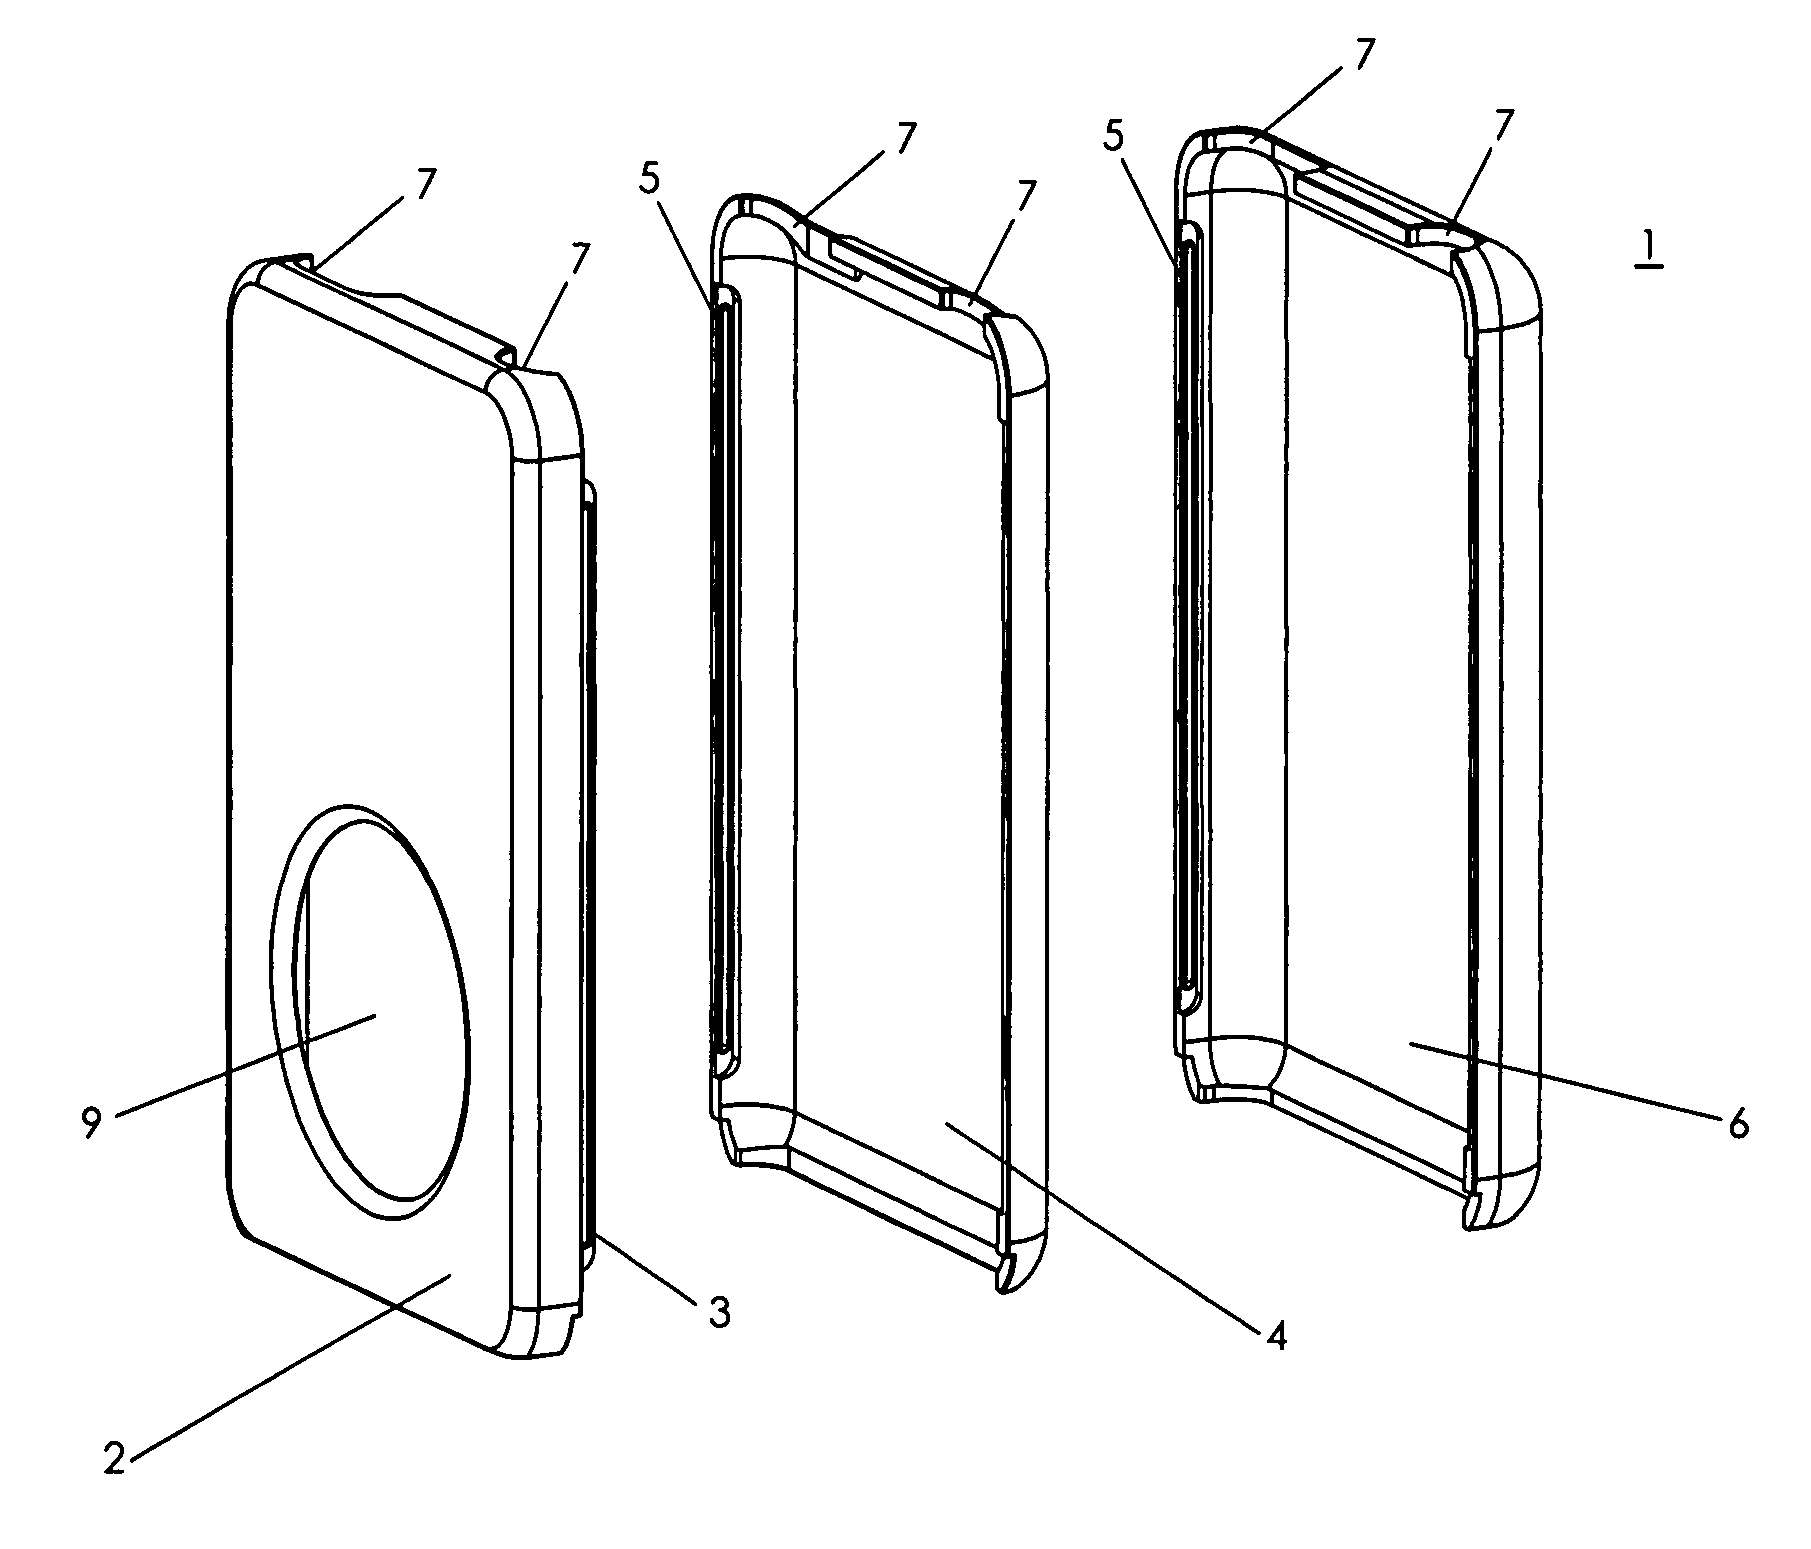 Portable electronic device case configuration